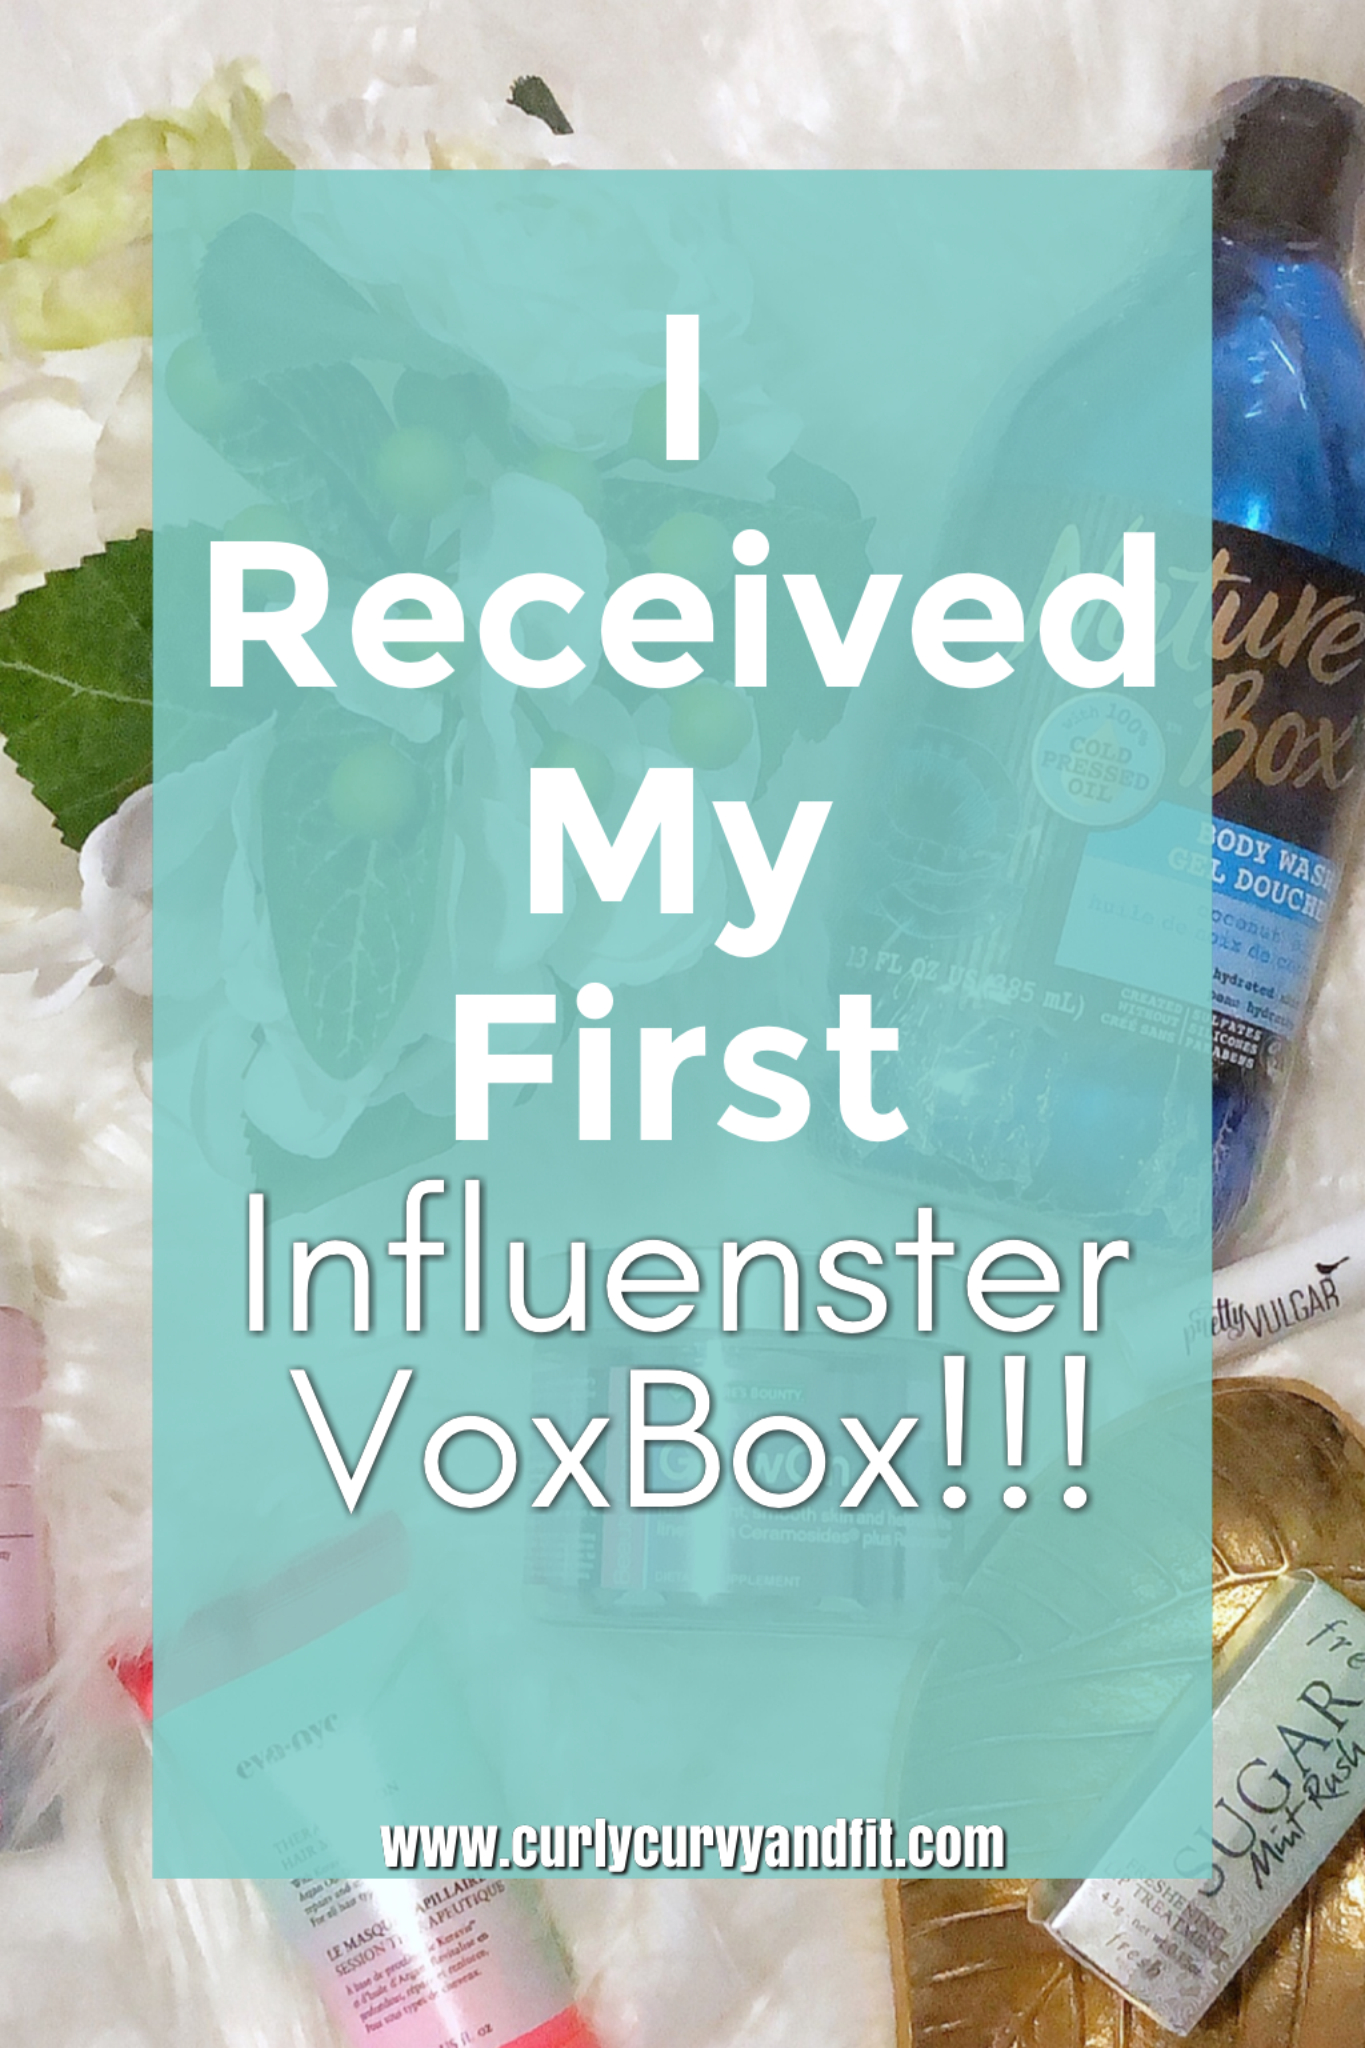 I received my first influenster voxbox pin